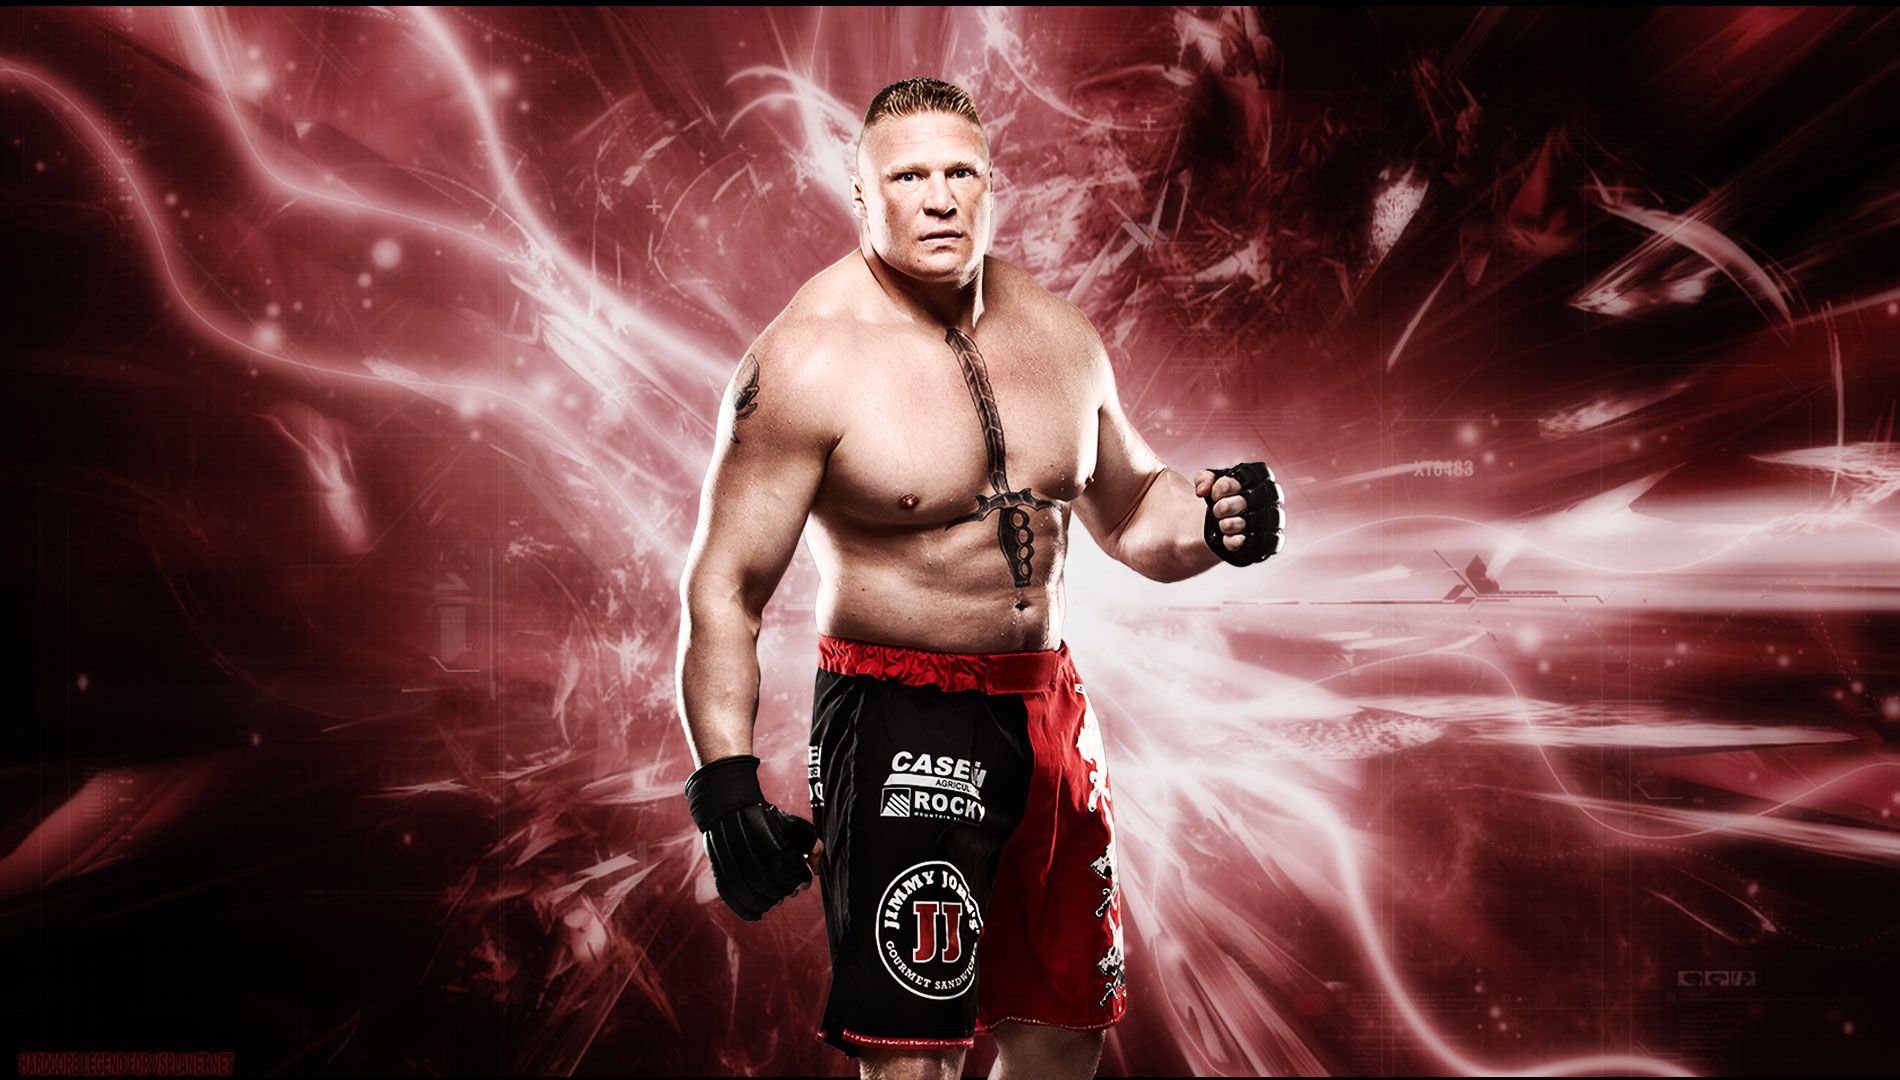 Brock Lesnar Wwe Champion Modeling Wallpaper For Desktop | Daily ...